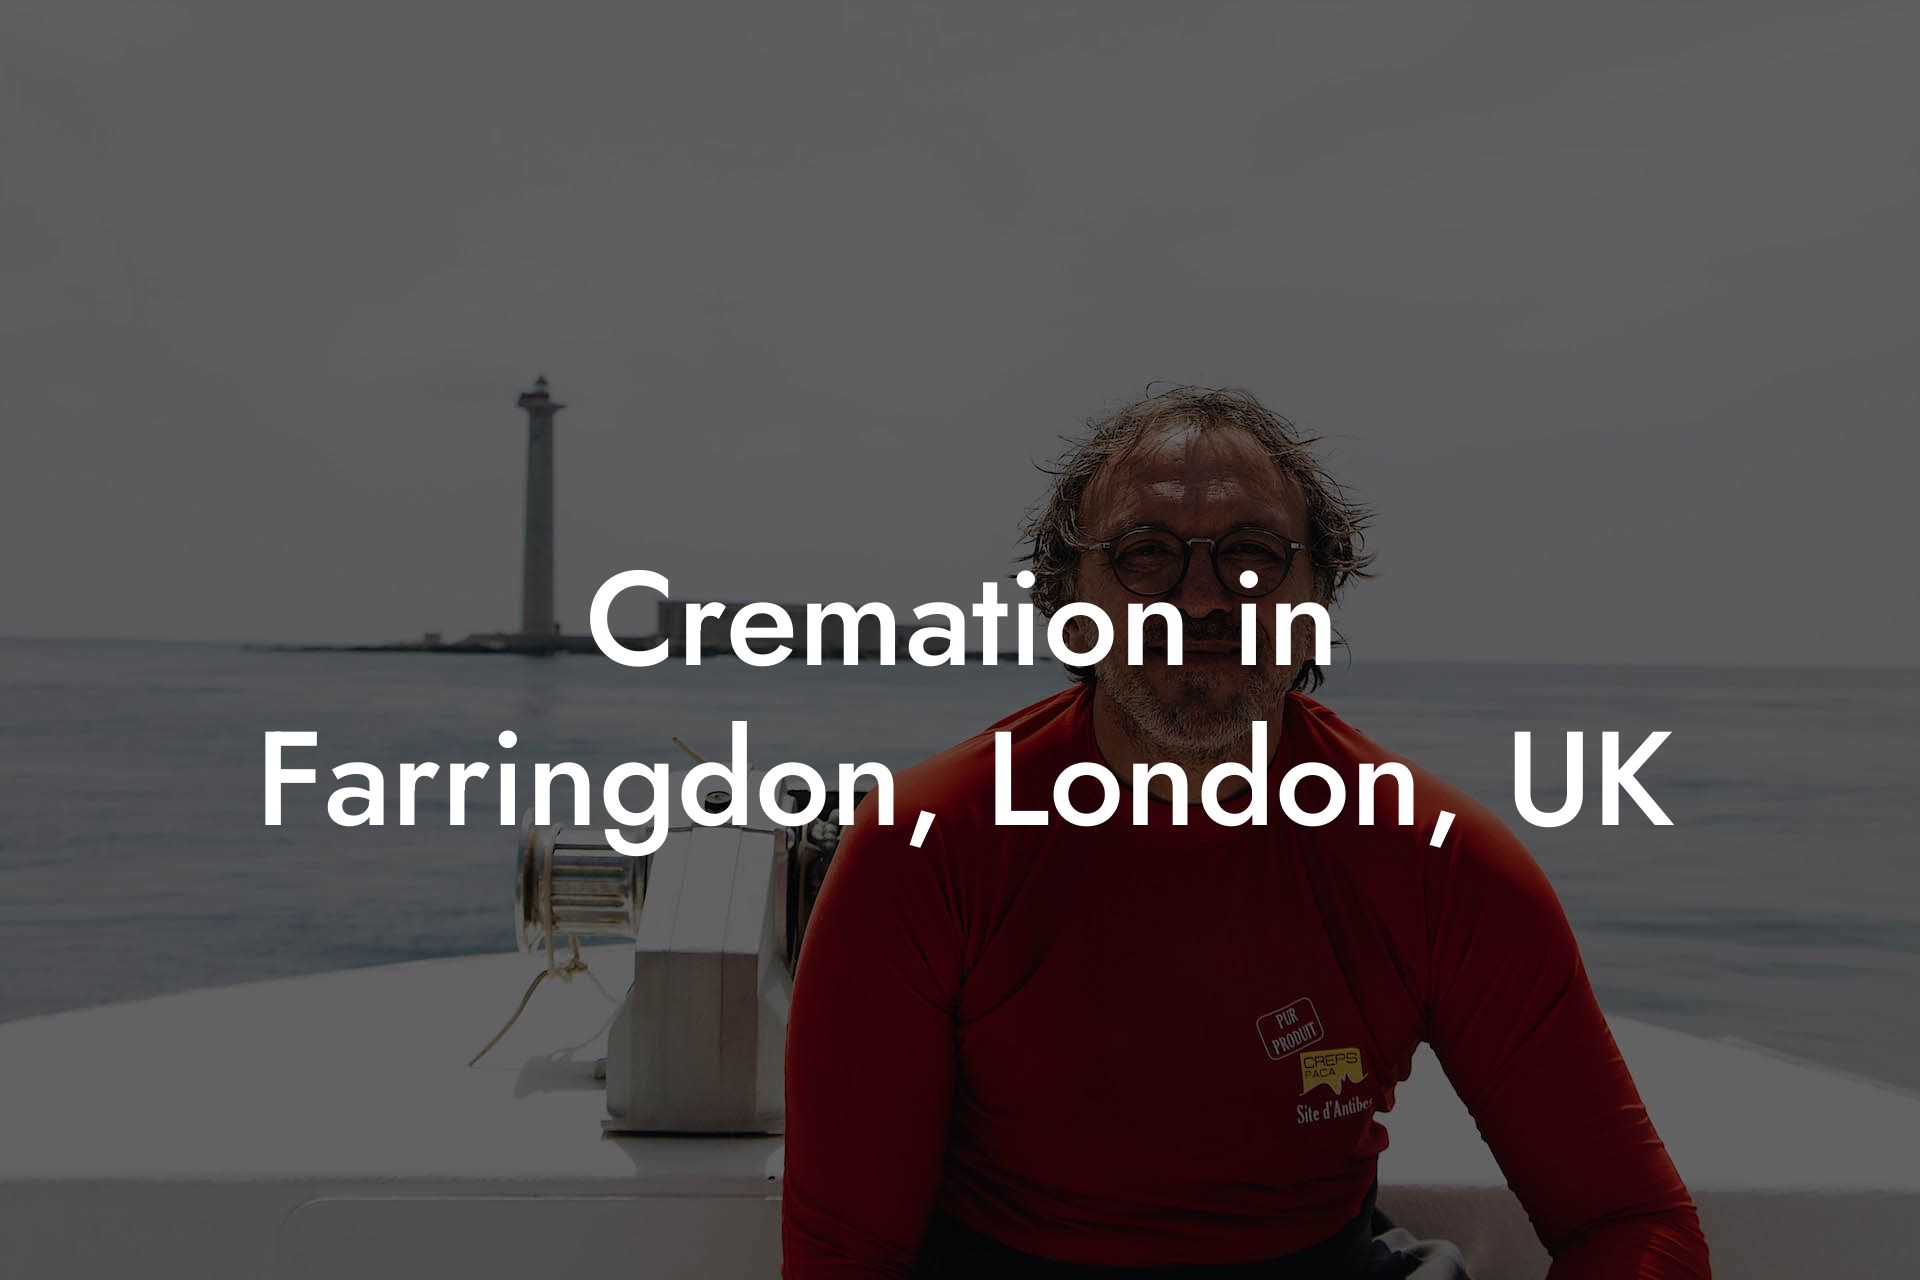 Cremation in Farringdon, London, UK